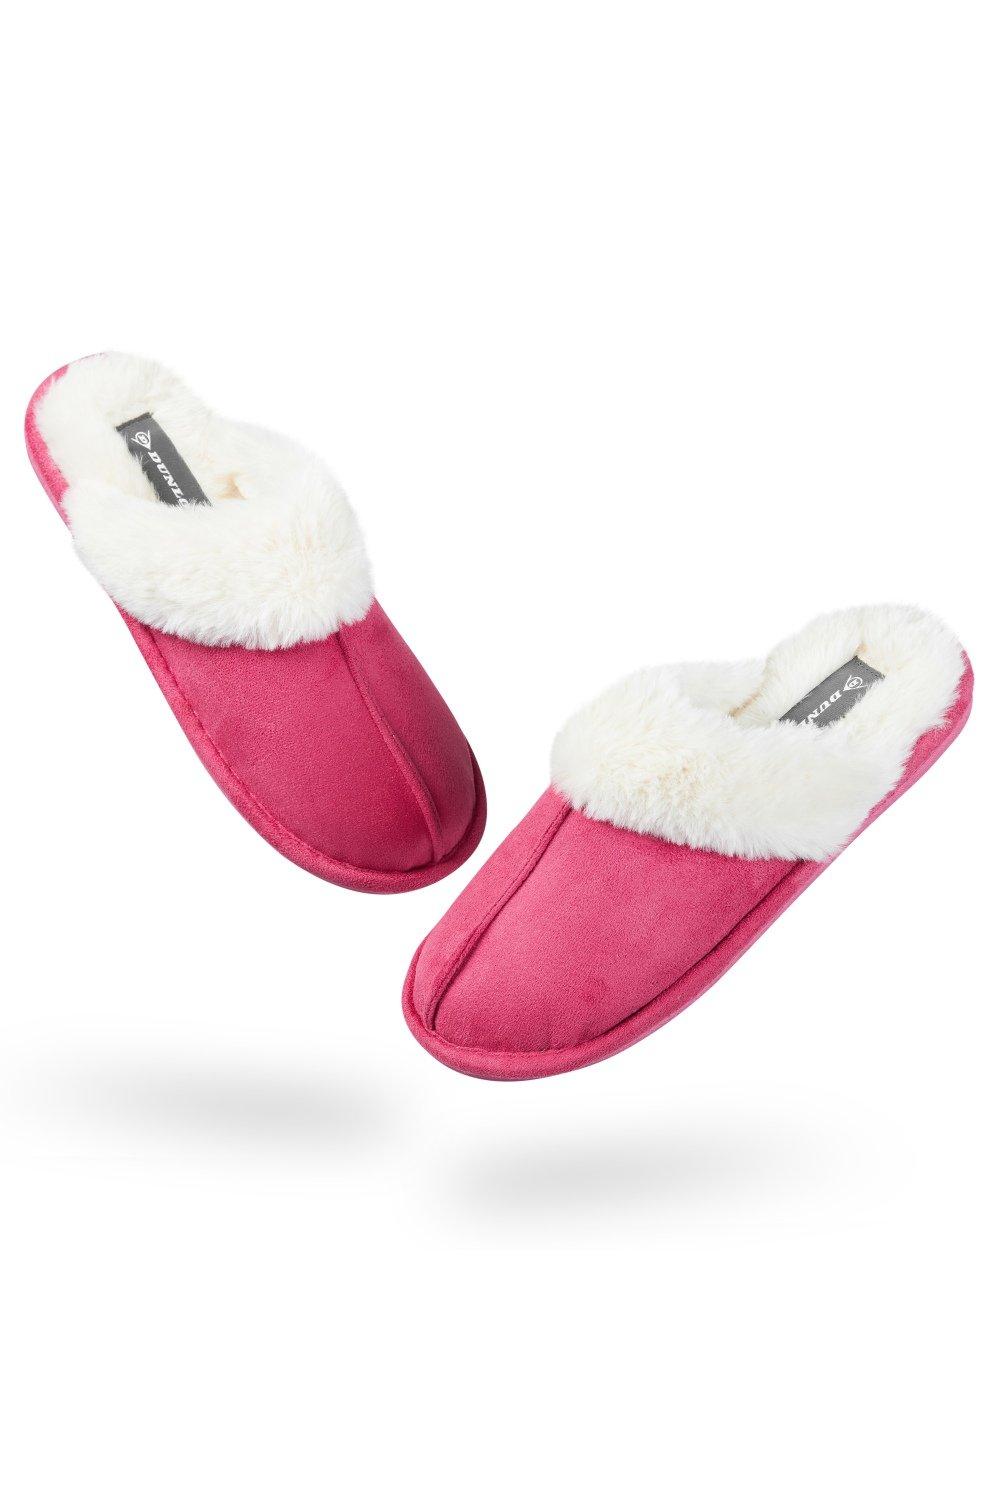 bebealy suede fur plush slippers for women winter fuzzy soft collar fur lining fluffy slippers indoor furry house slippers women Домашние пушистые тапочки на толстой меховой подкладке Dunlop, розовый